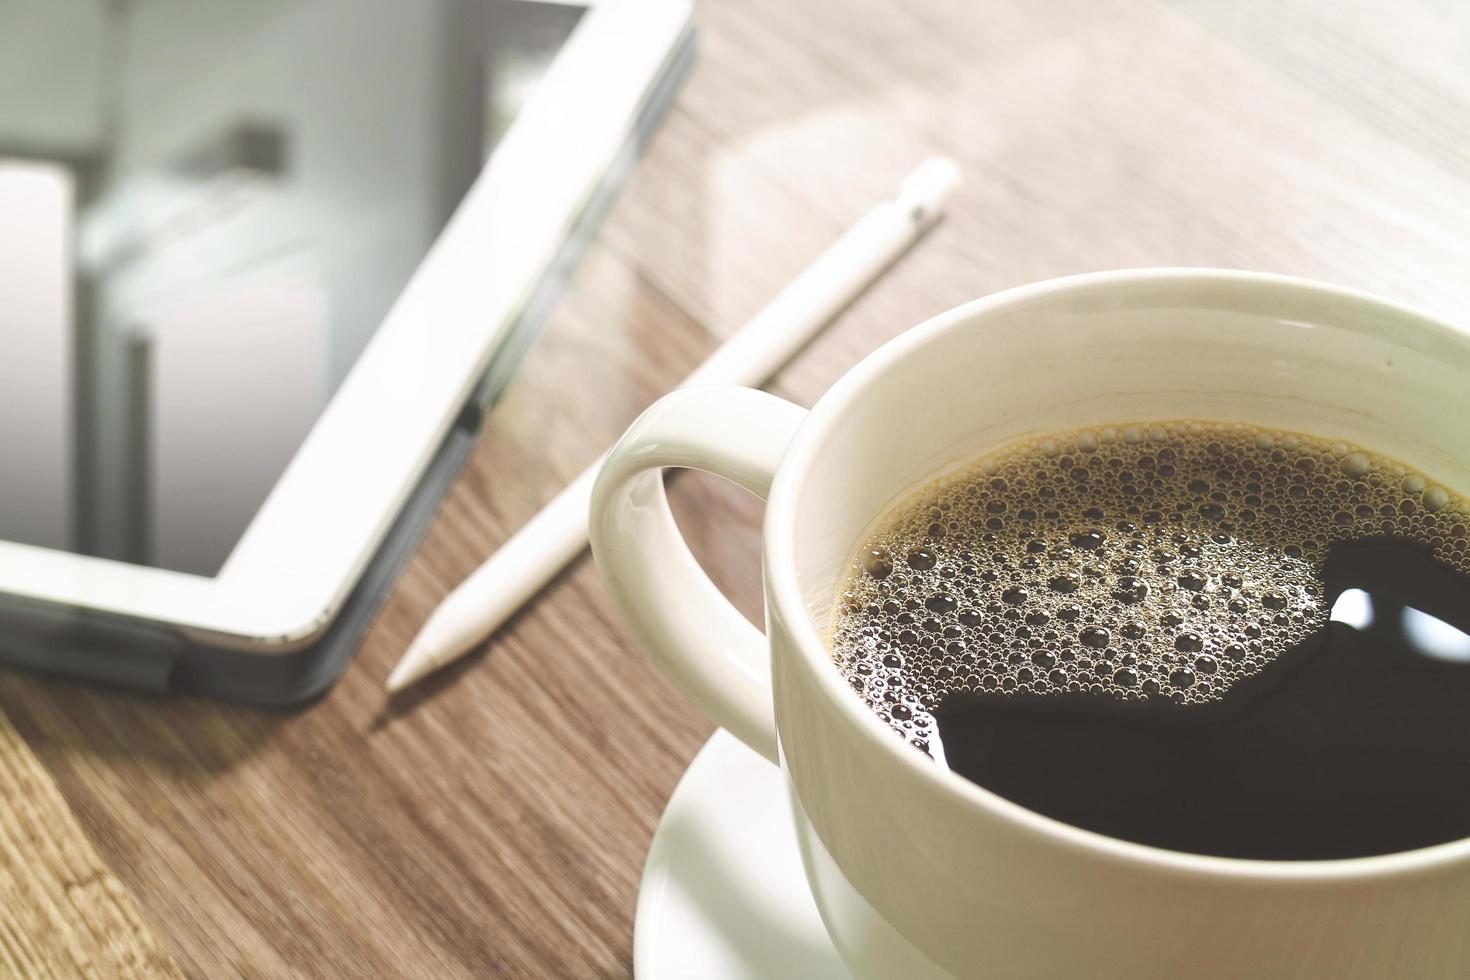 xícara de café e teclado inteligente dock de mesa digital, óculos, caneta stylus na mesa de madeira, efeito de filtro foto